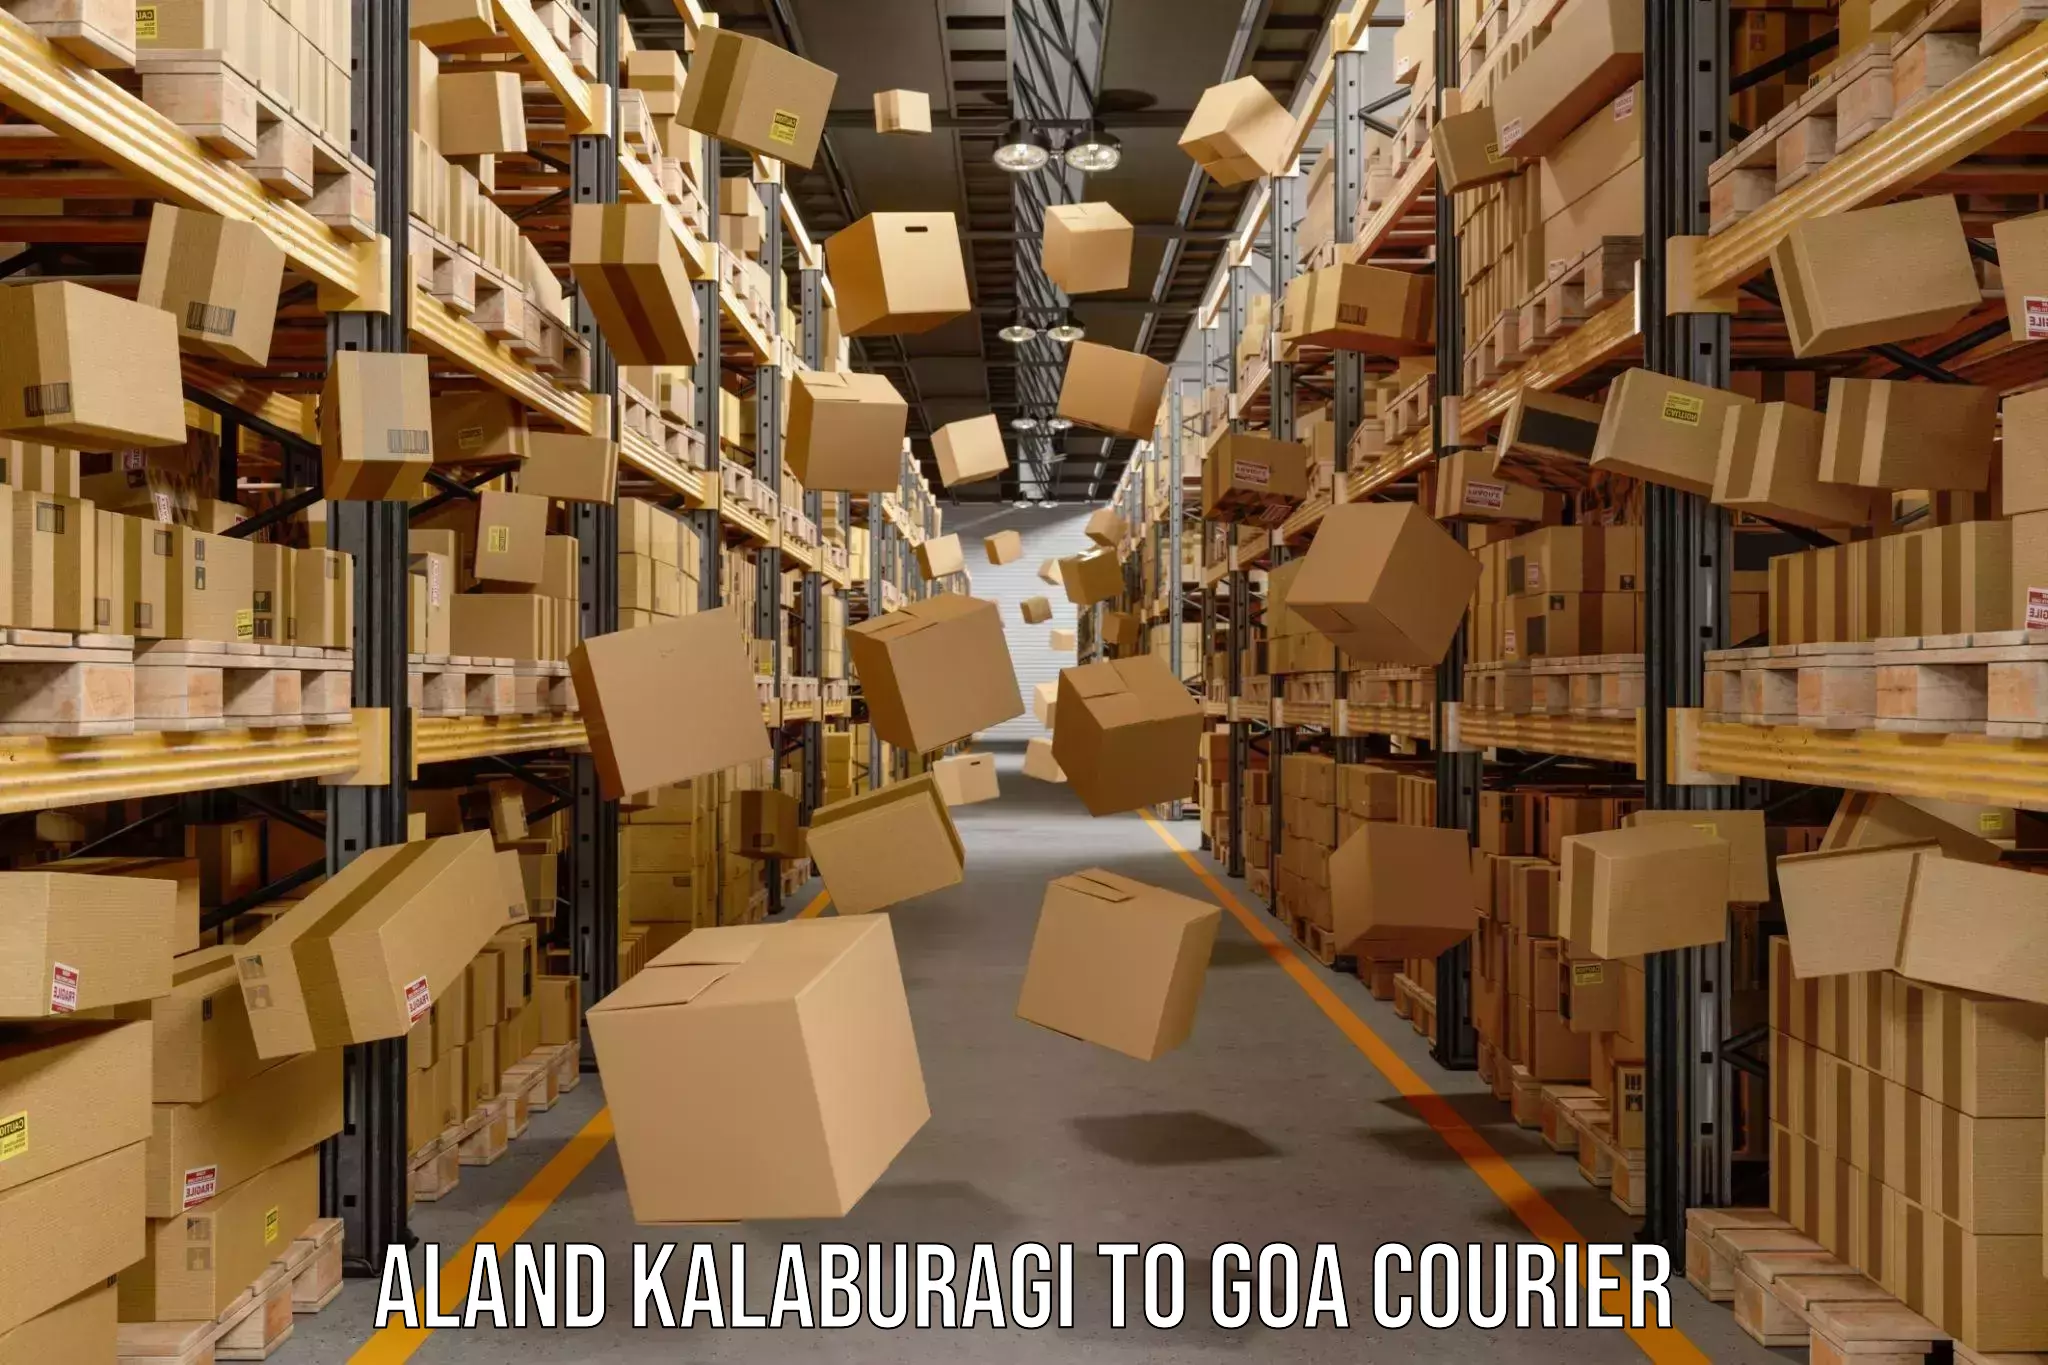 Express delivery network Aland Kalaburagi to South Goa